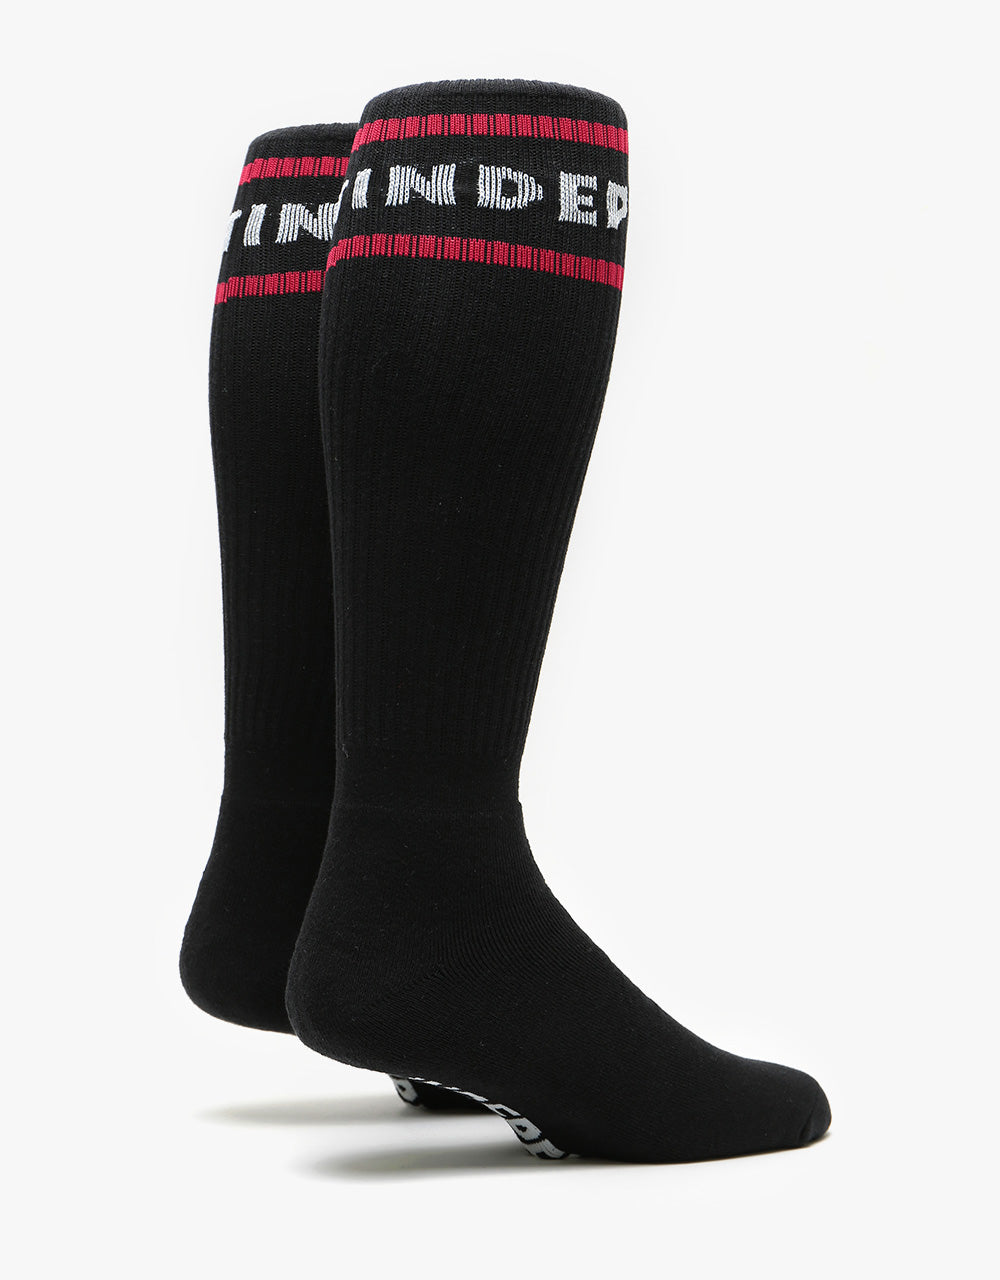 Independent ITC Streak Tall Socks - Black